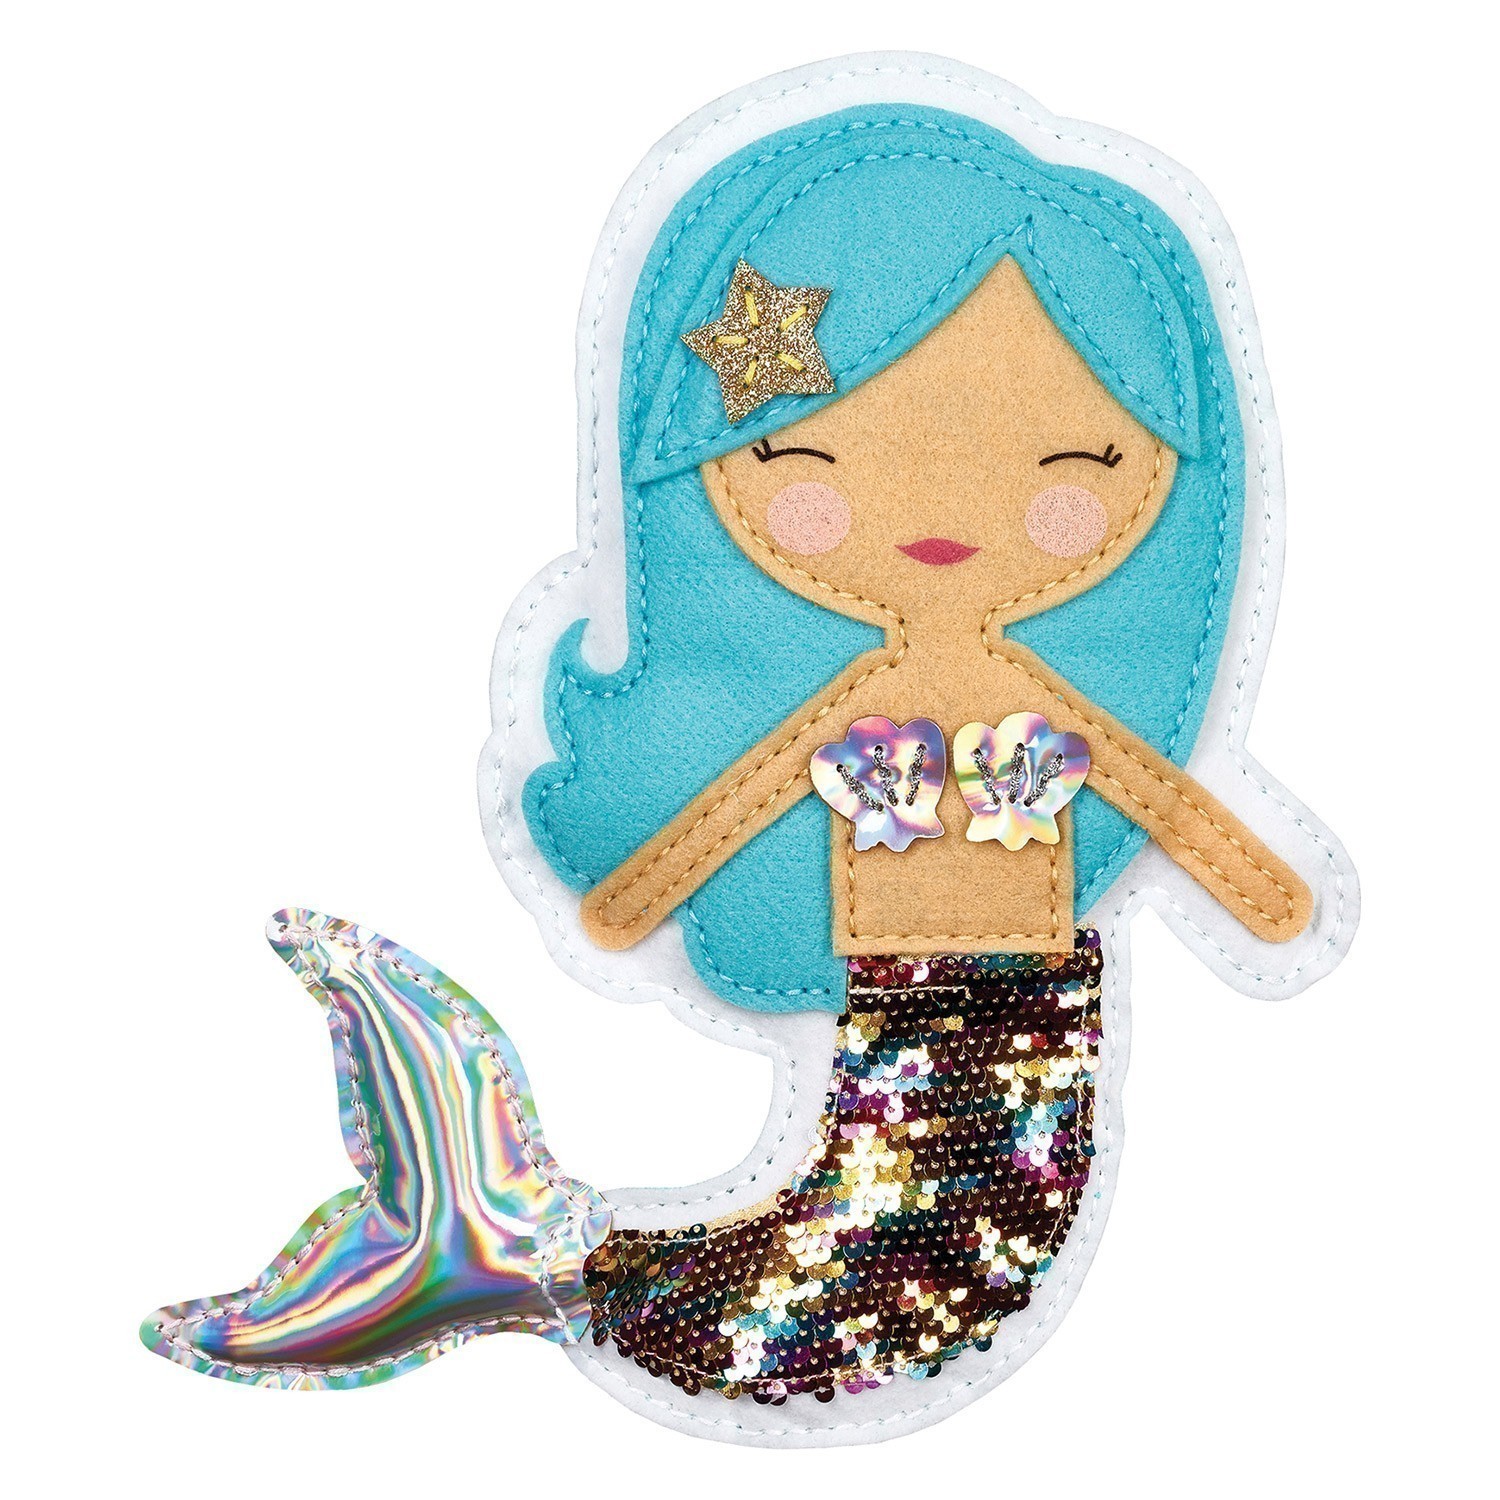 My Studio Girl - Sew-Your-Own - Glitterati Mermaid Pillow